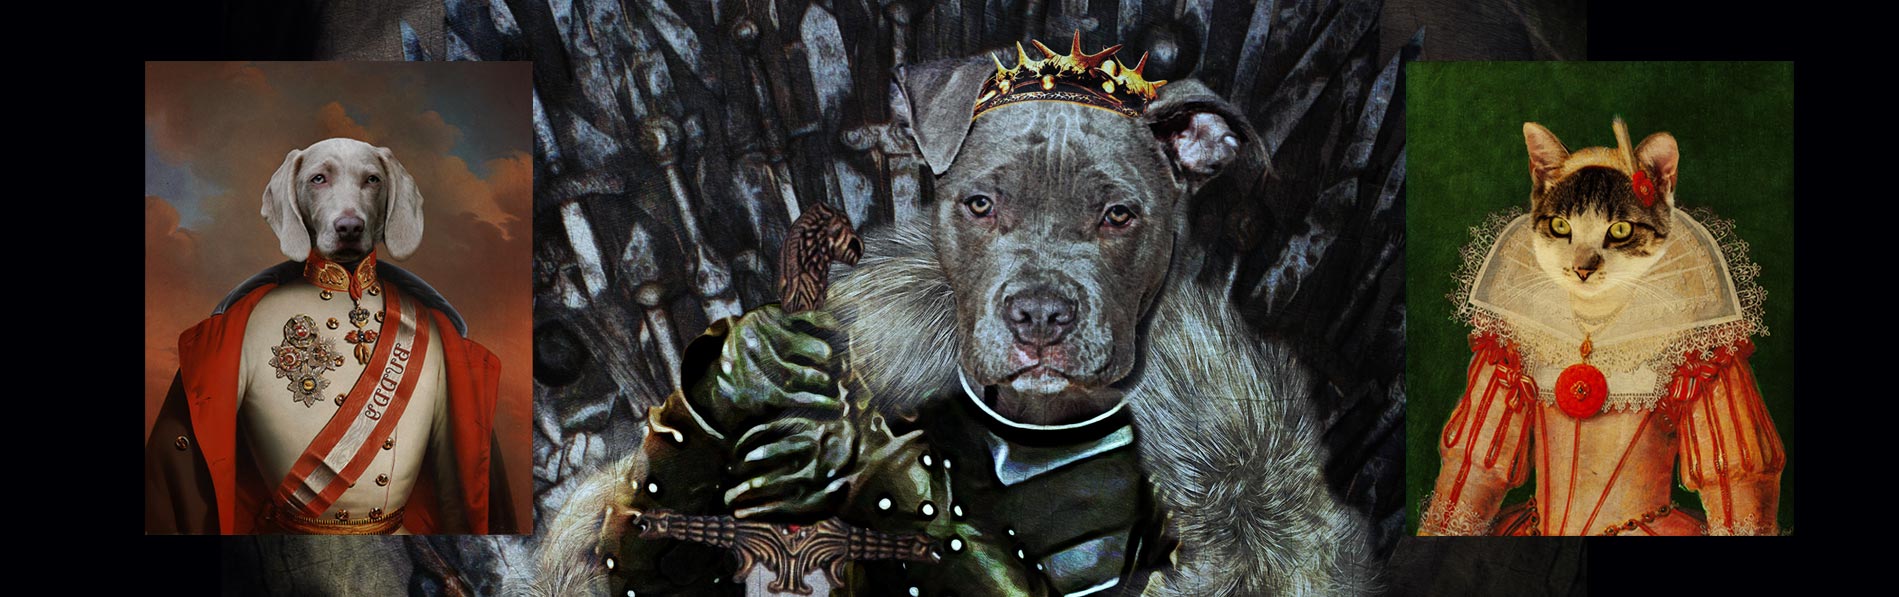 Game of Thrones inspired pet portrait